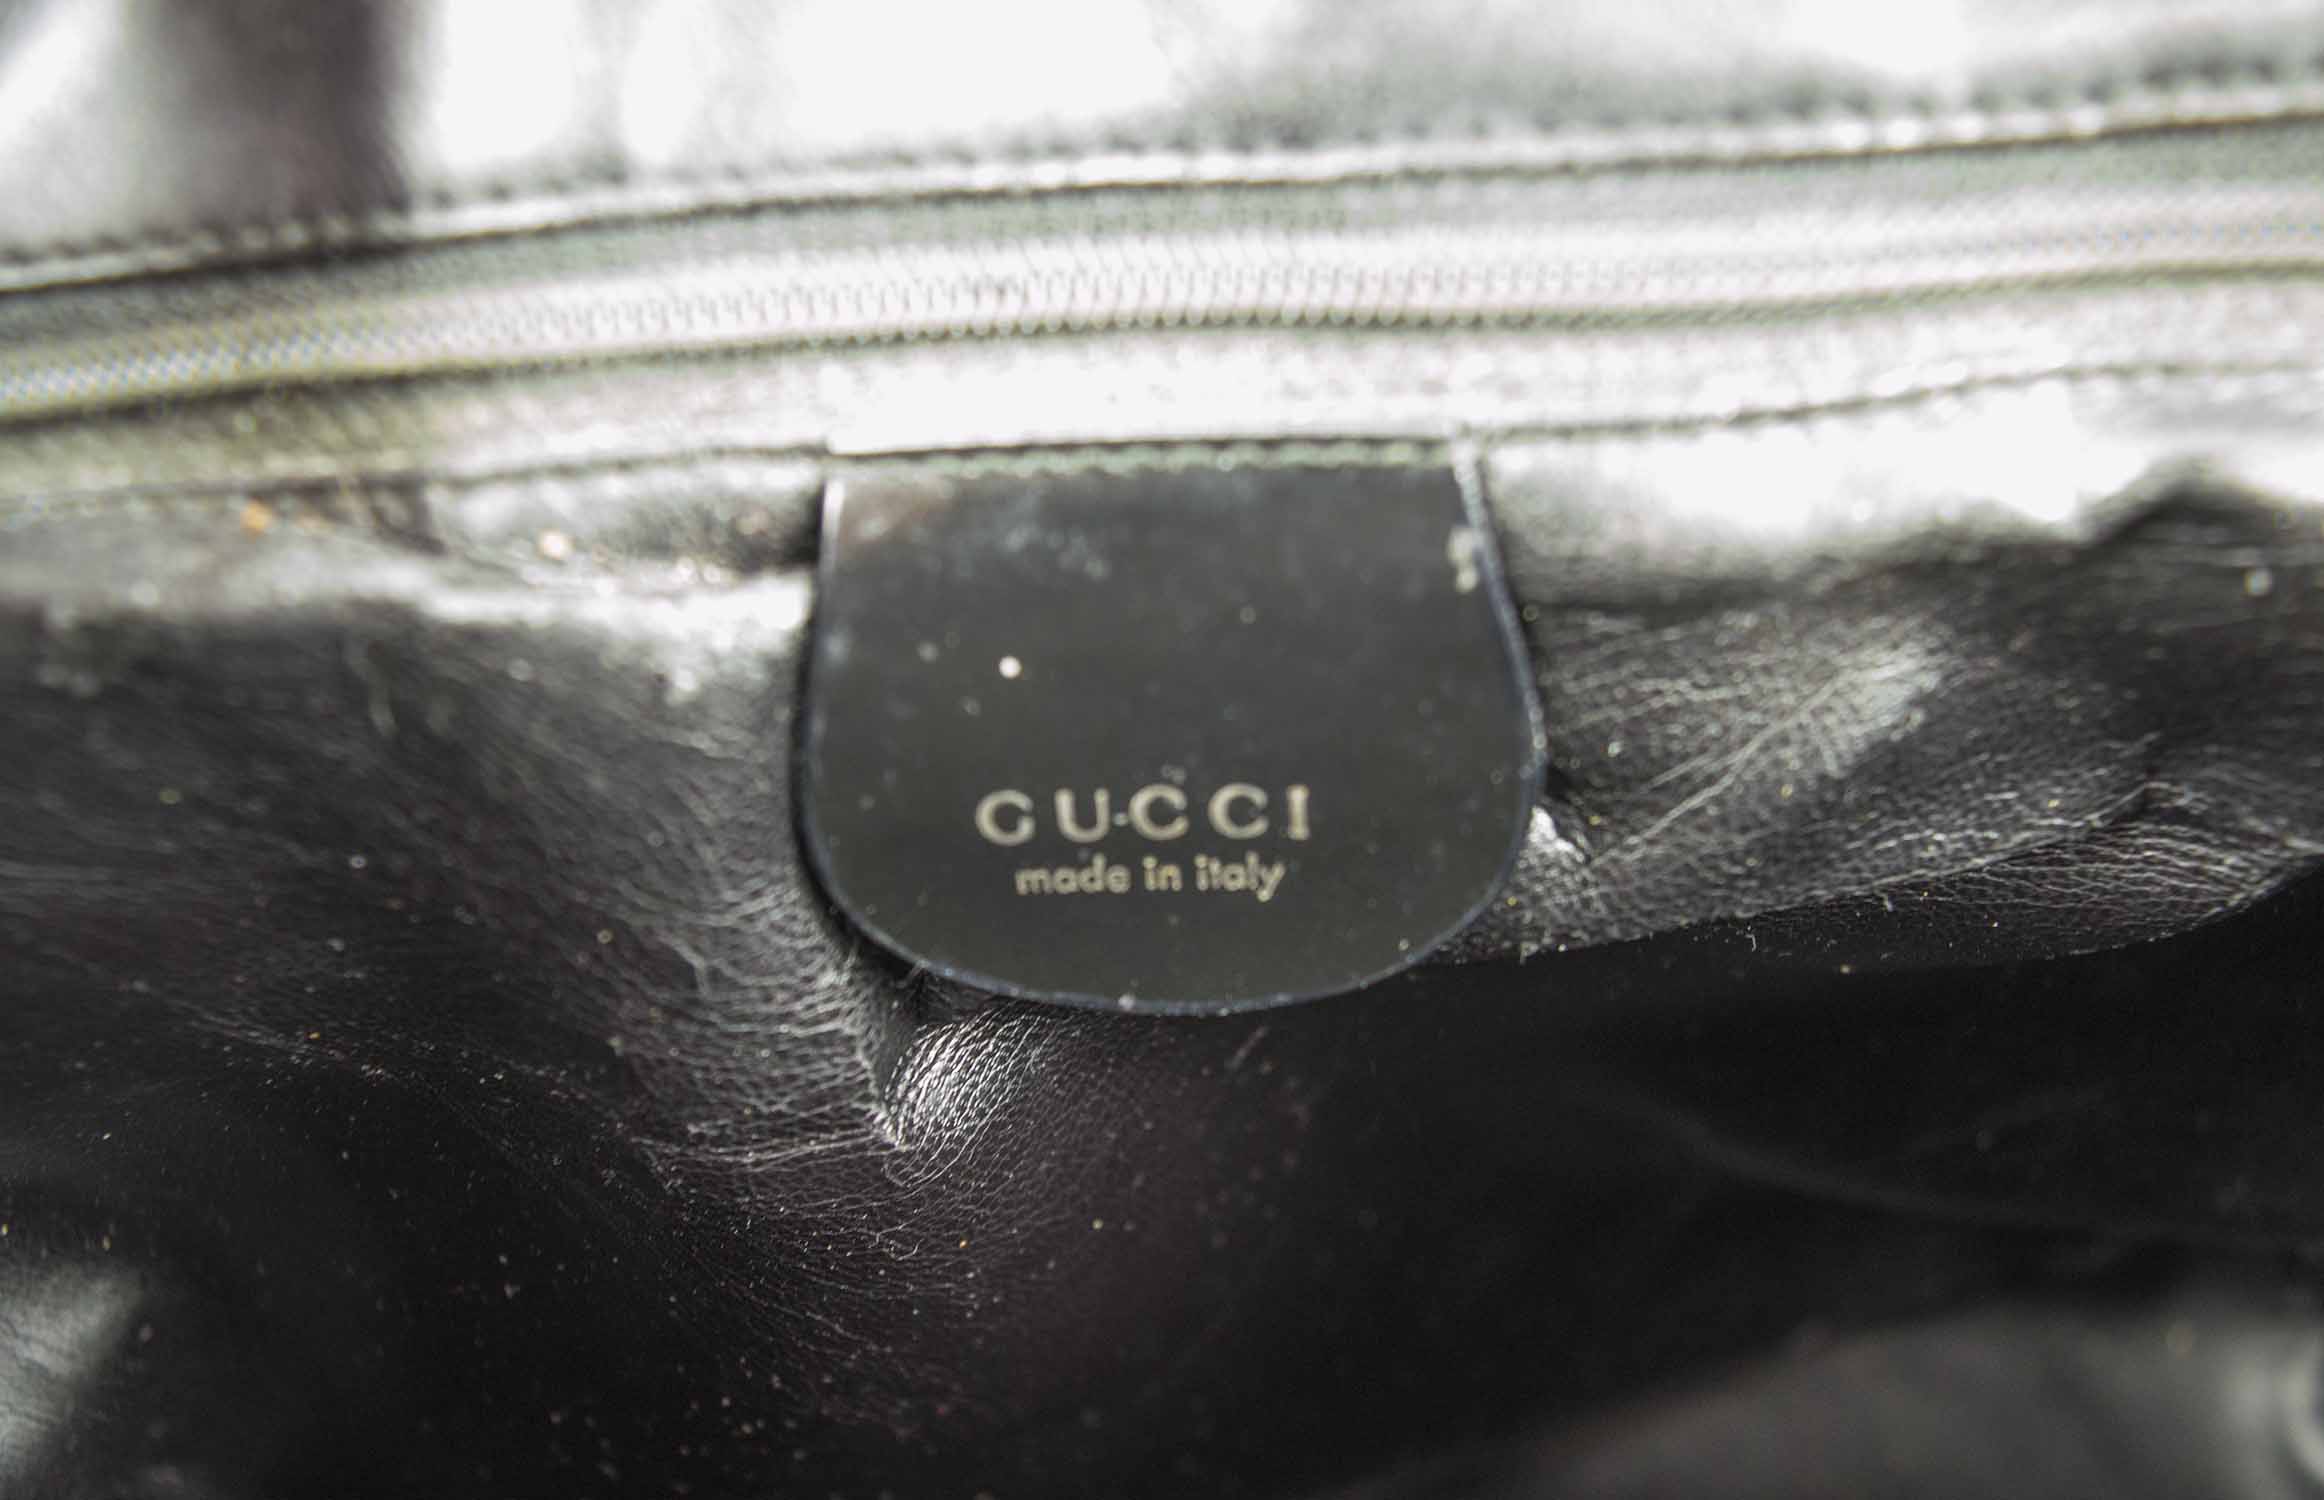 GUCCI Vintage Monogram Bag / Gucci 000 115 0084 